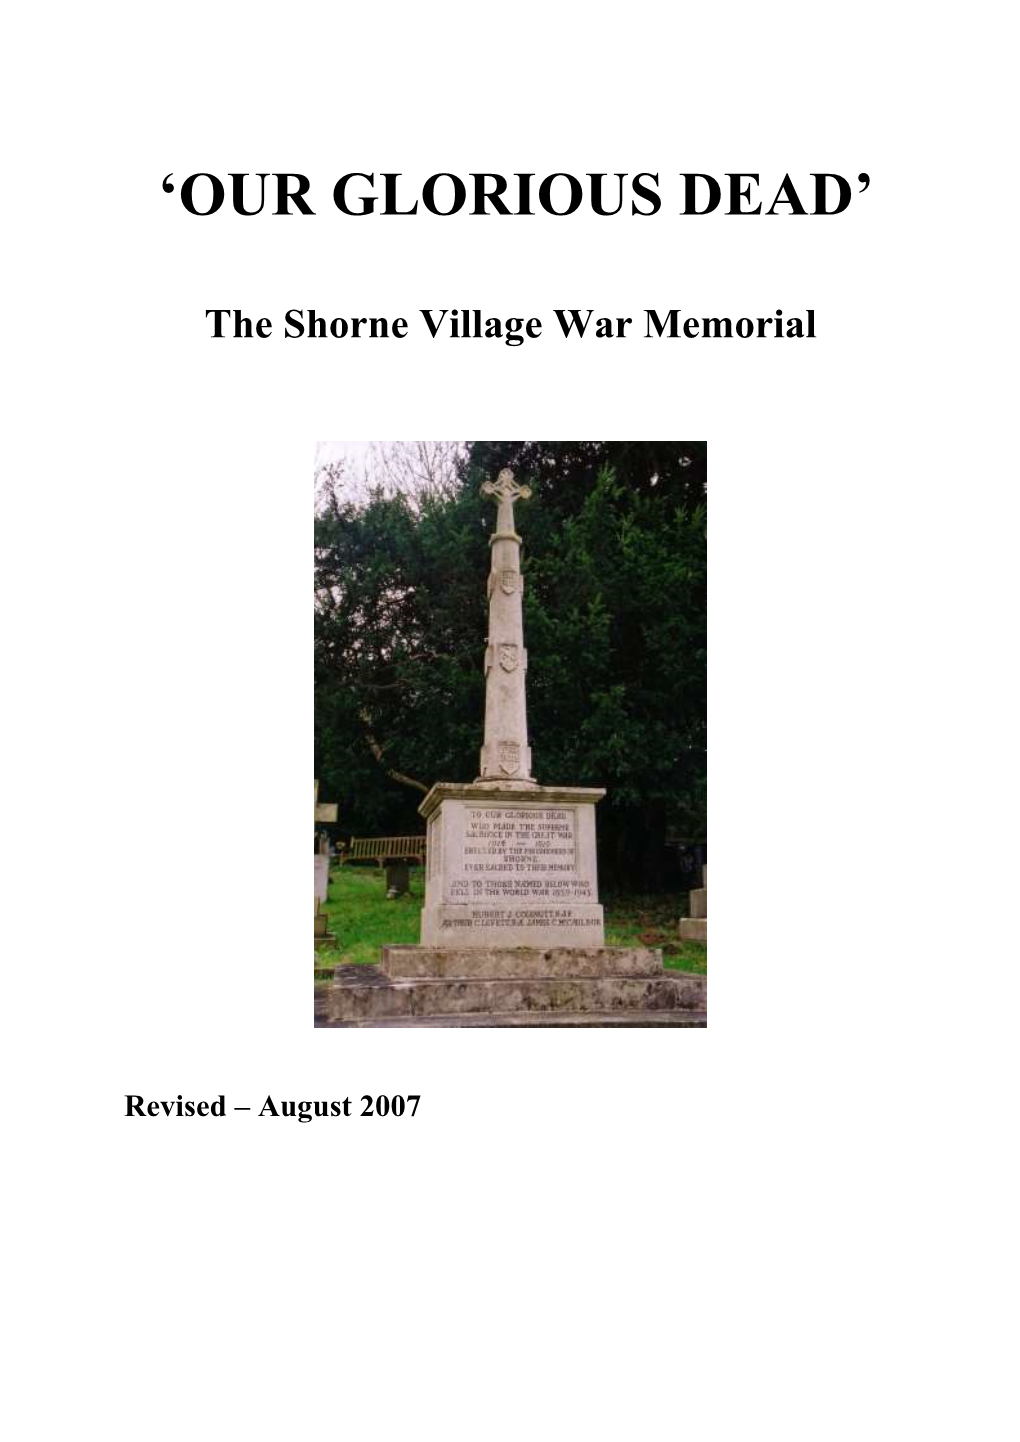 'OUR GLORIOUS DEAD' the Shorne Village War Memorial